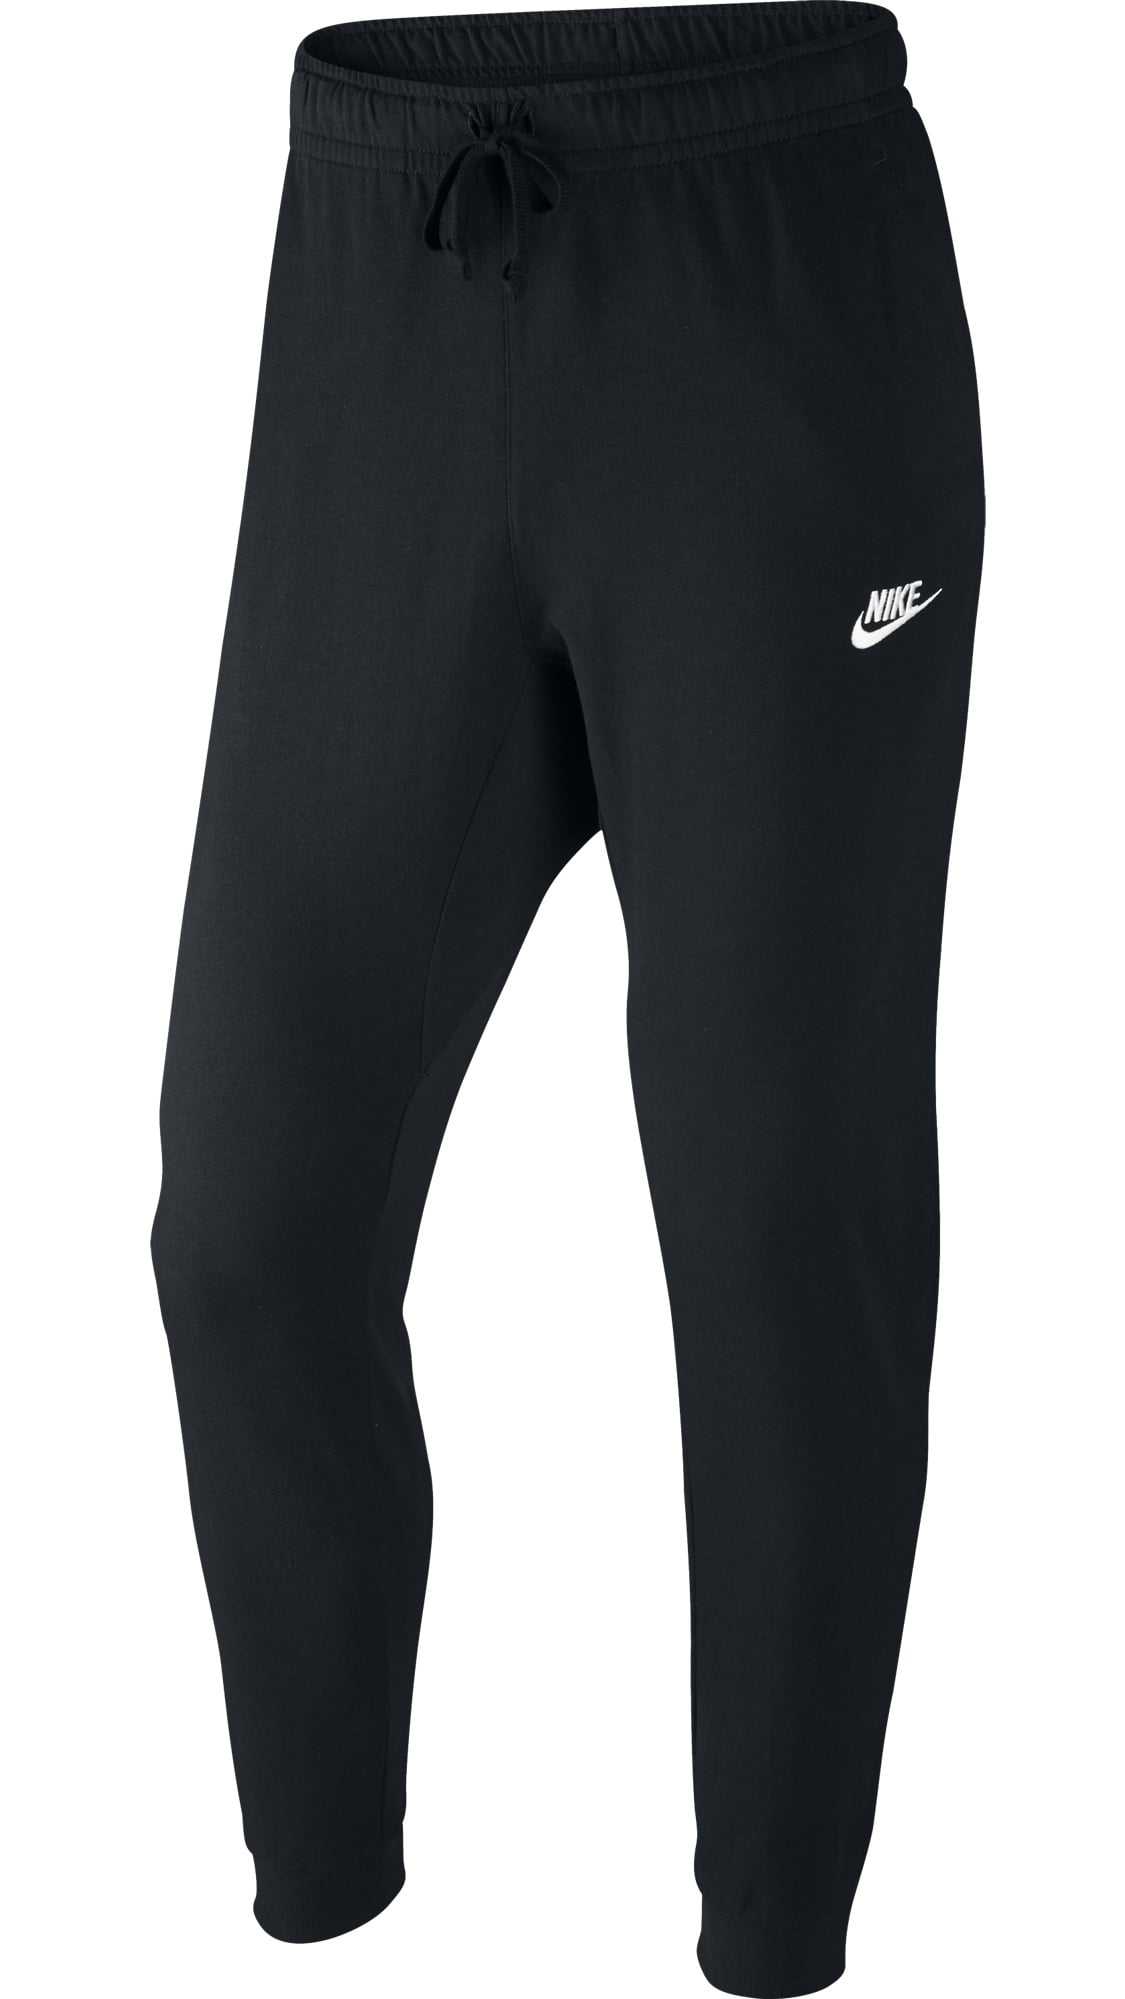 nike men's sportswear jogger pants black/white - Walmart.com